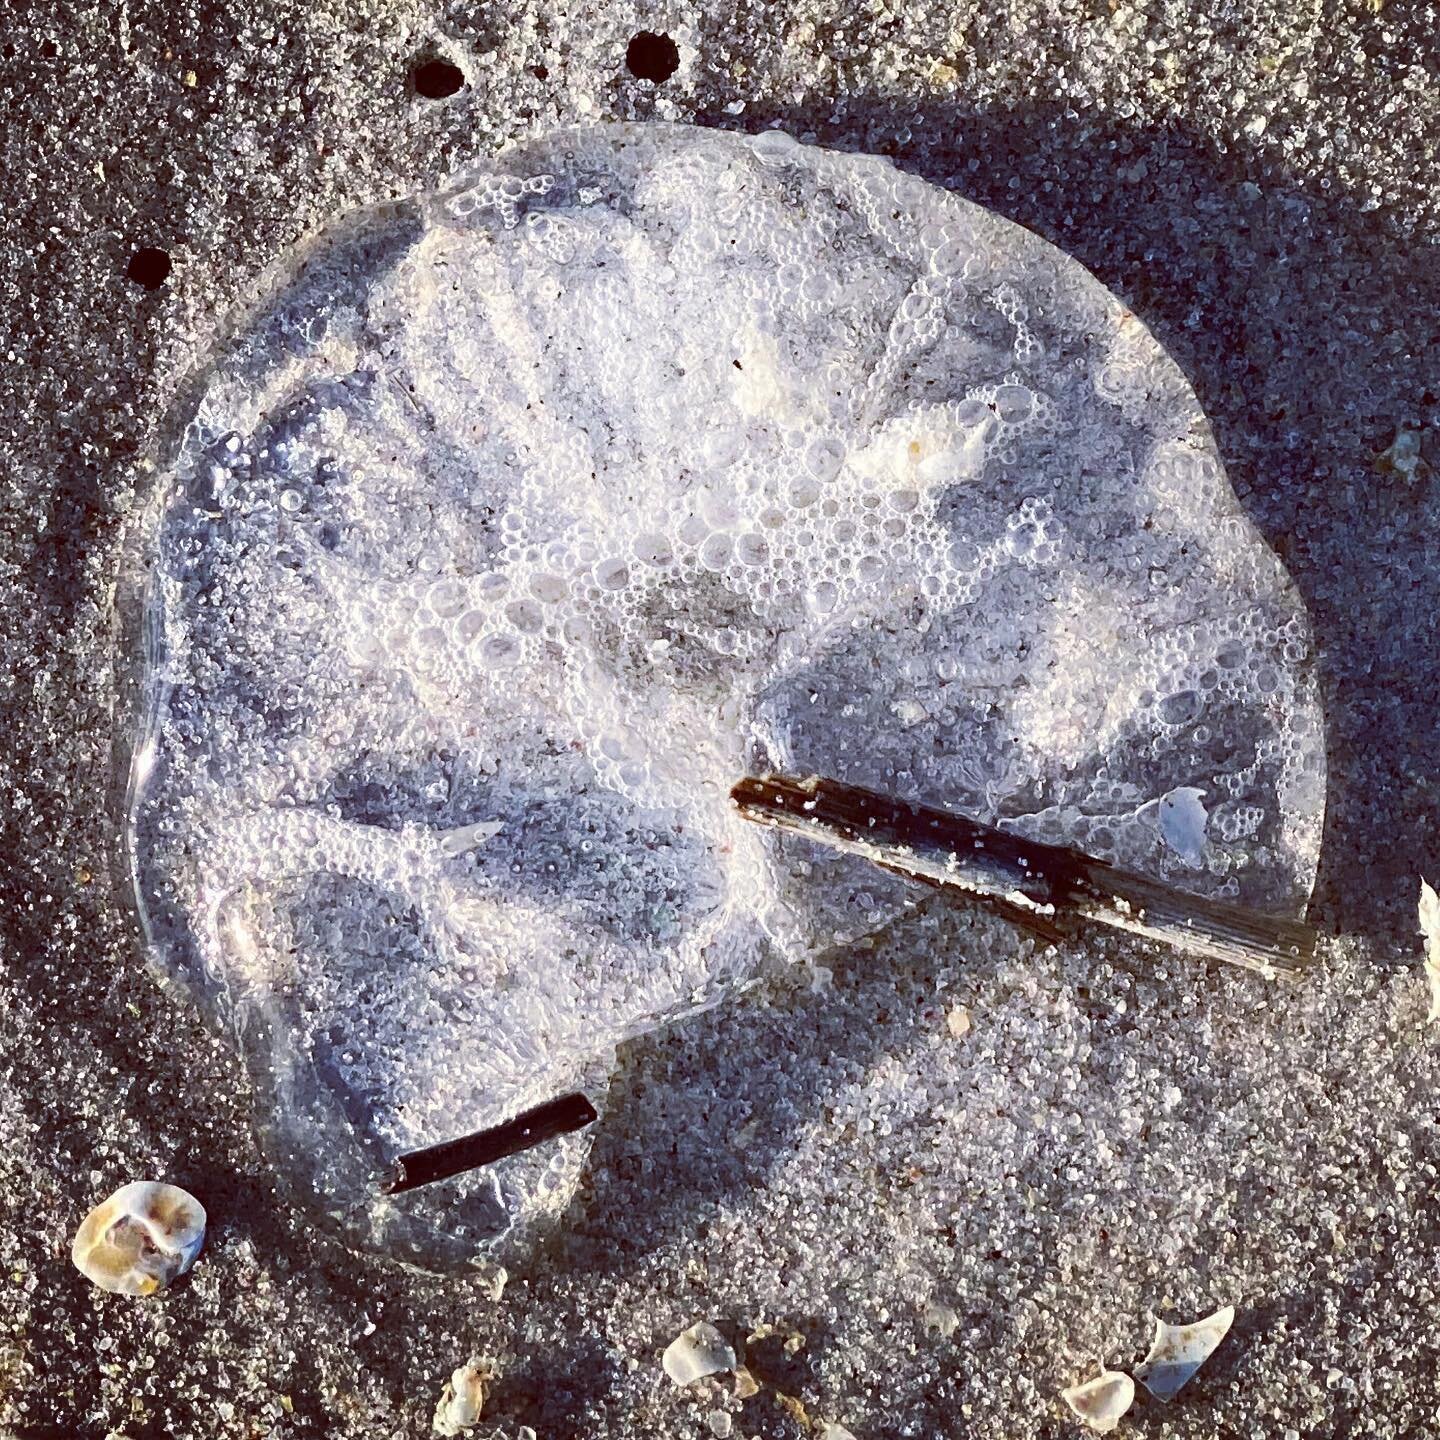 Jellyfish fragment